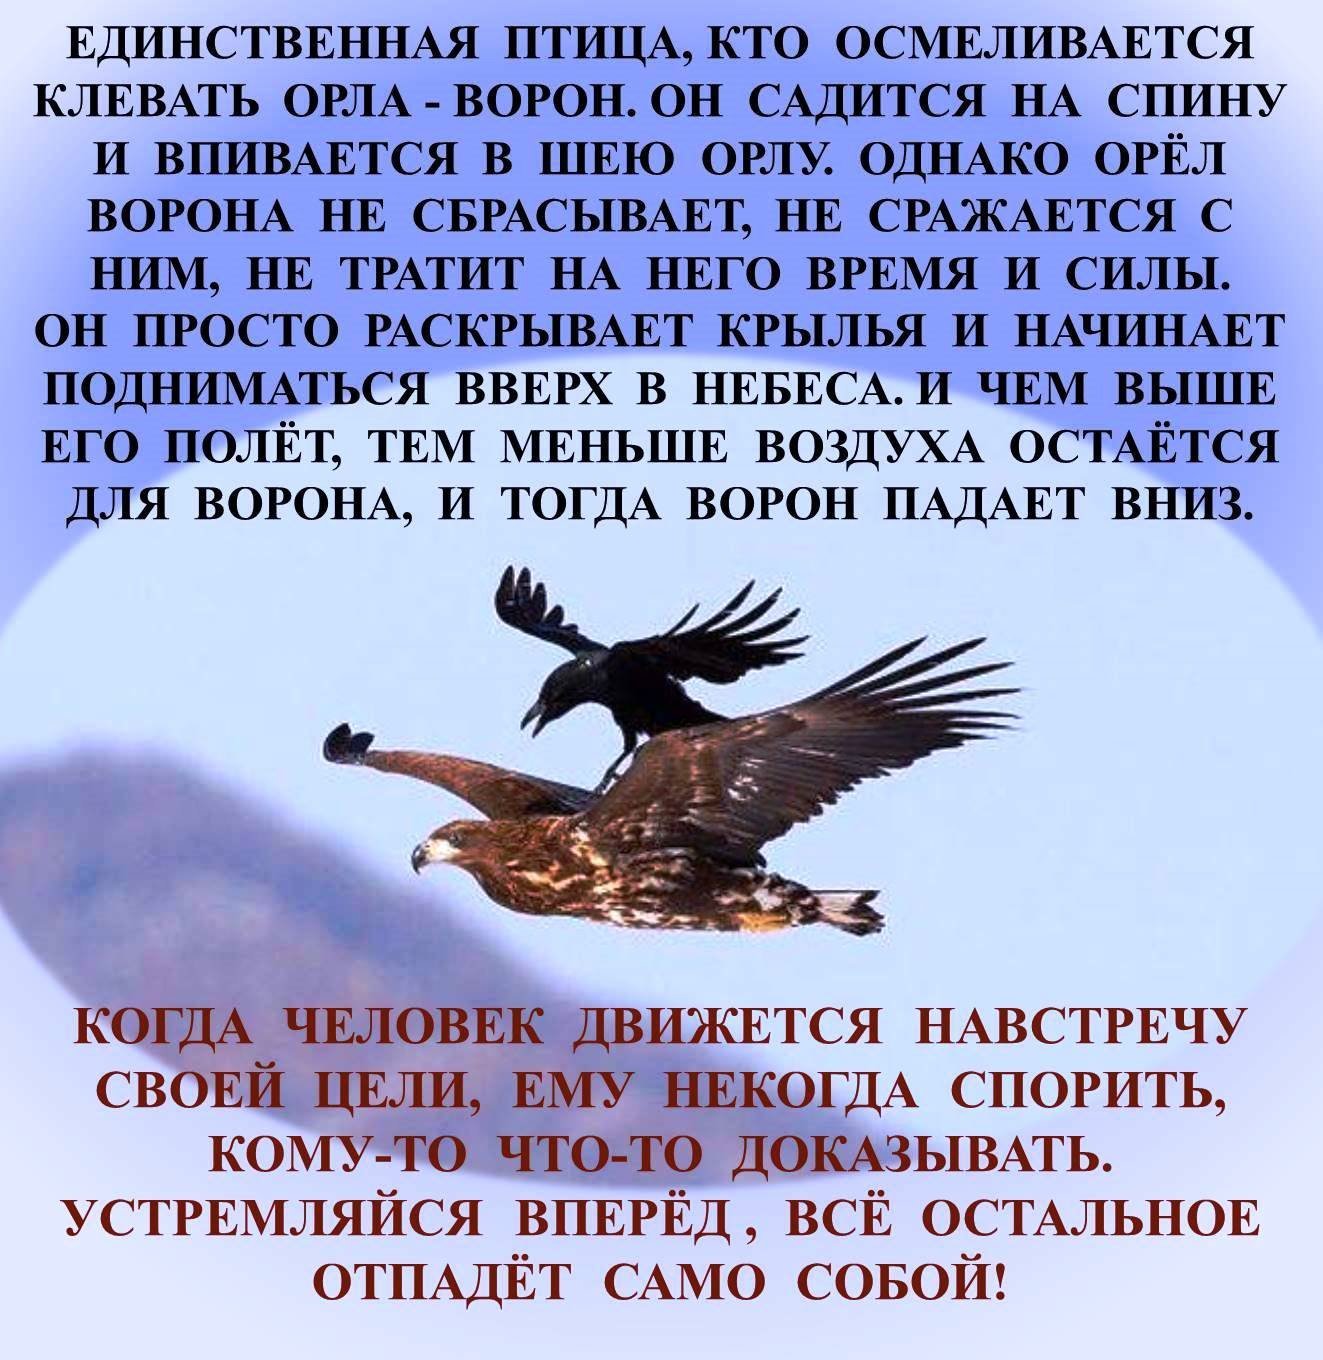 Стихотворение про орлов. Притча про орла и ворона. Орел и ворон притча. Притча об Орле и вороне. Притча про орла.